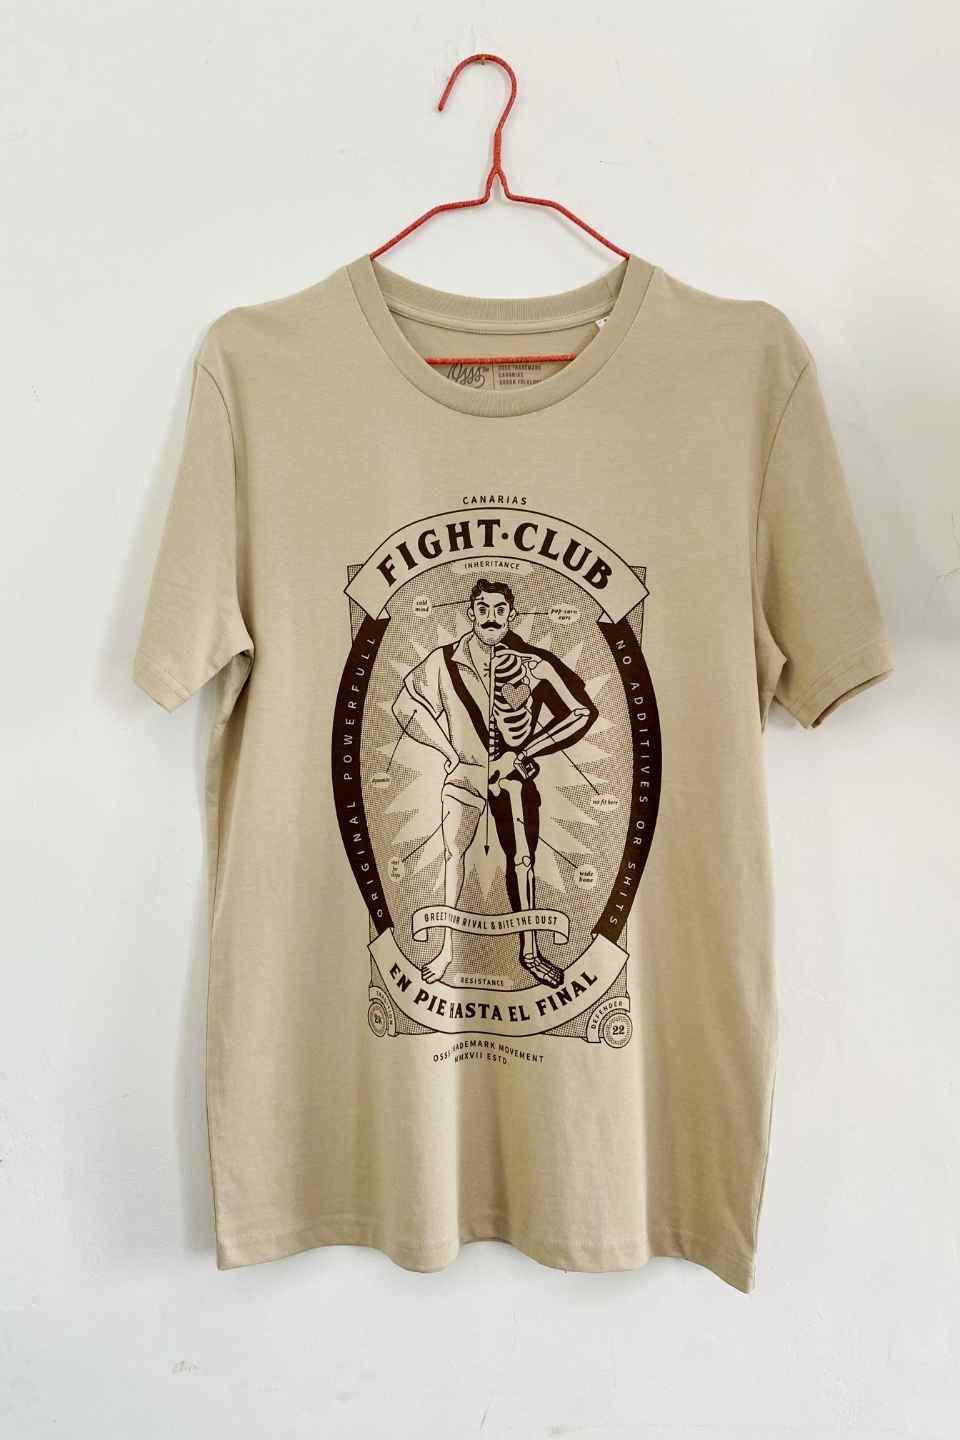 Untado desmayarse combinar Camiseta Fight Club by Osss - Dicky Morgan